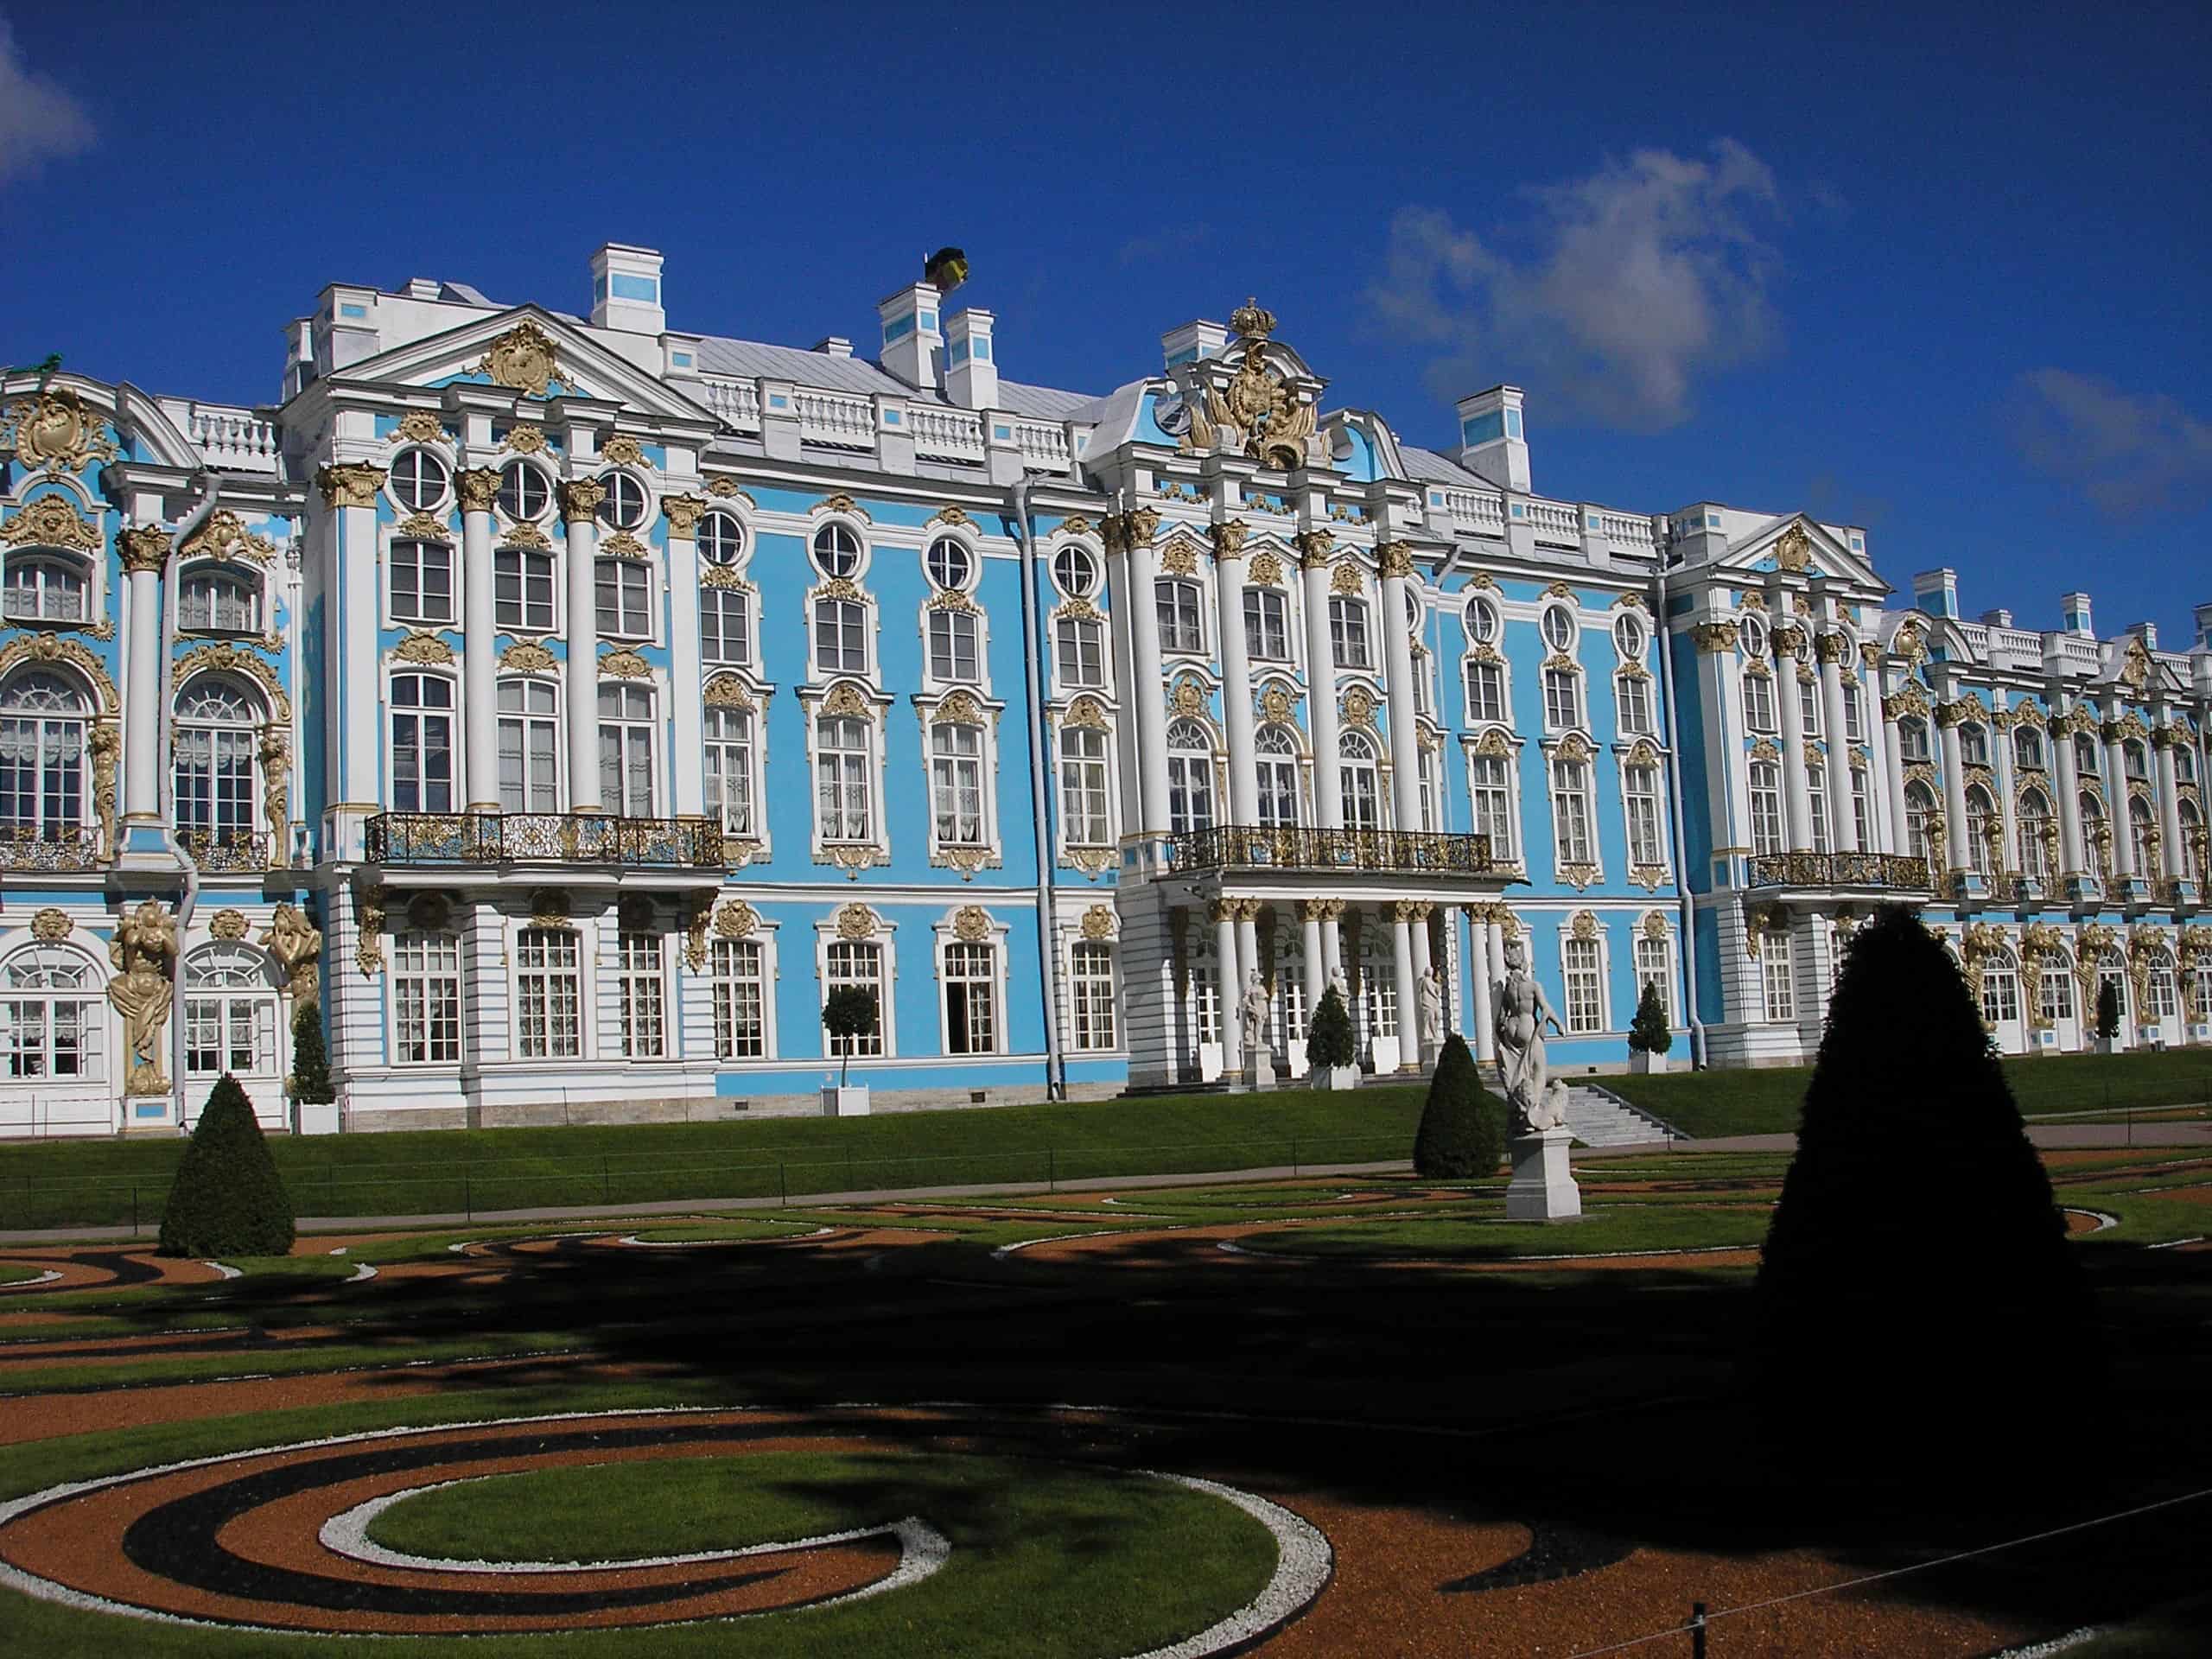 Catherine’s Grand Palace – St. Petersburg